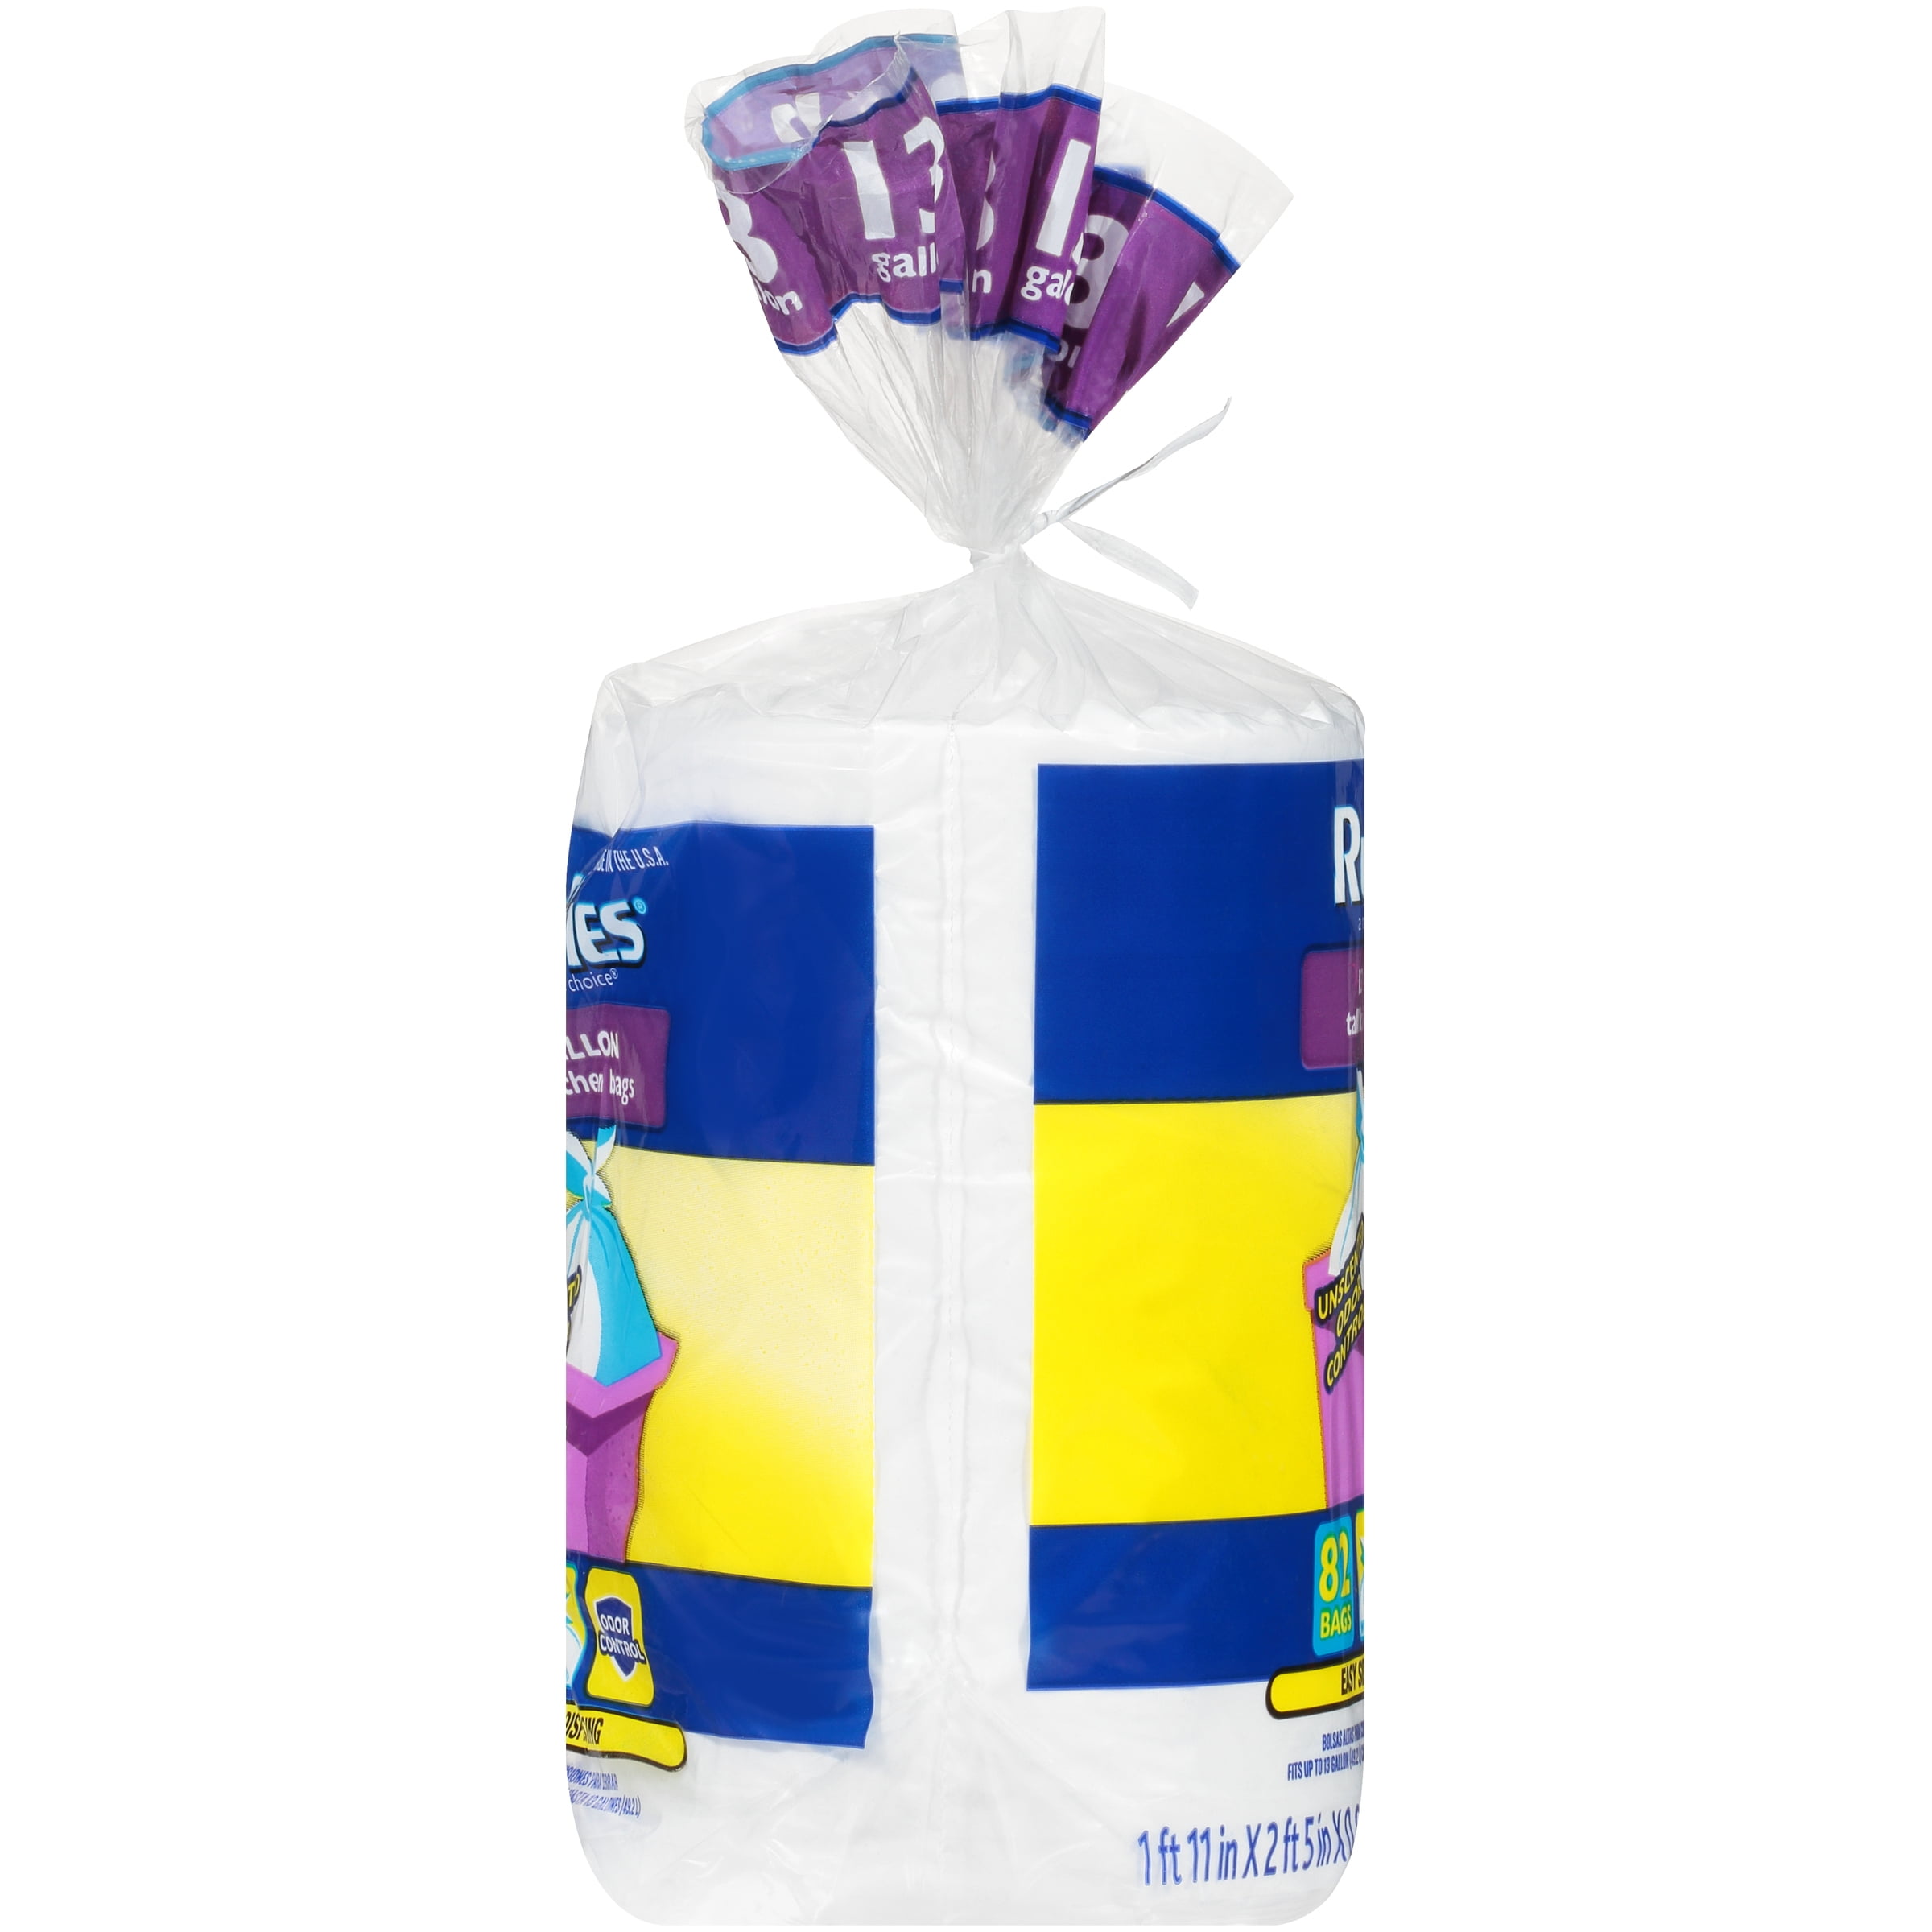 Trash Bags - 13 Gallon - Twist Tie - Tall Kitchen Bag Roll (Case Qty: –  Pans Pro